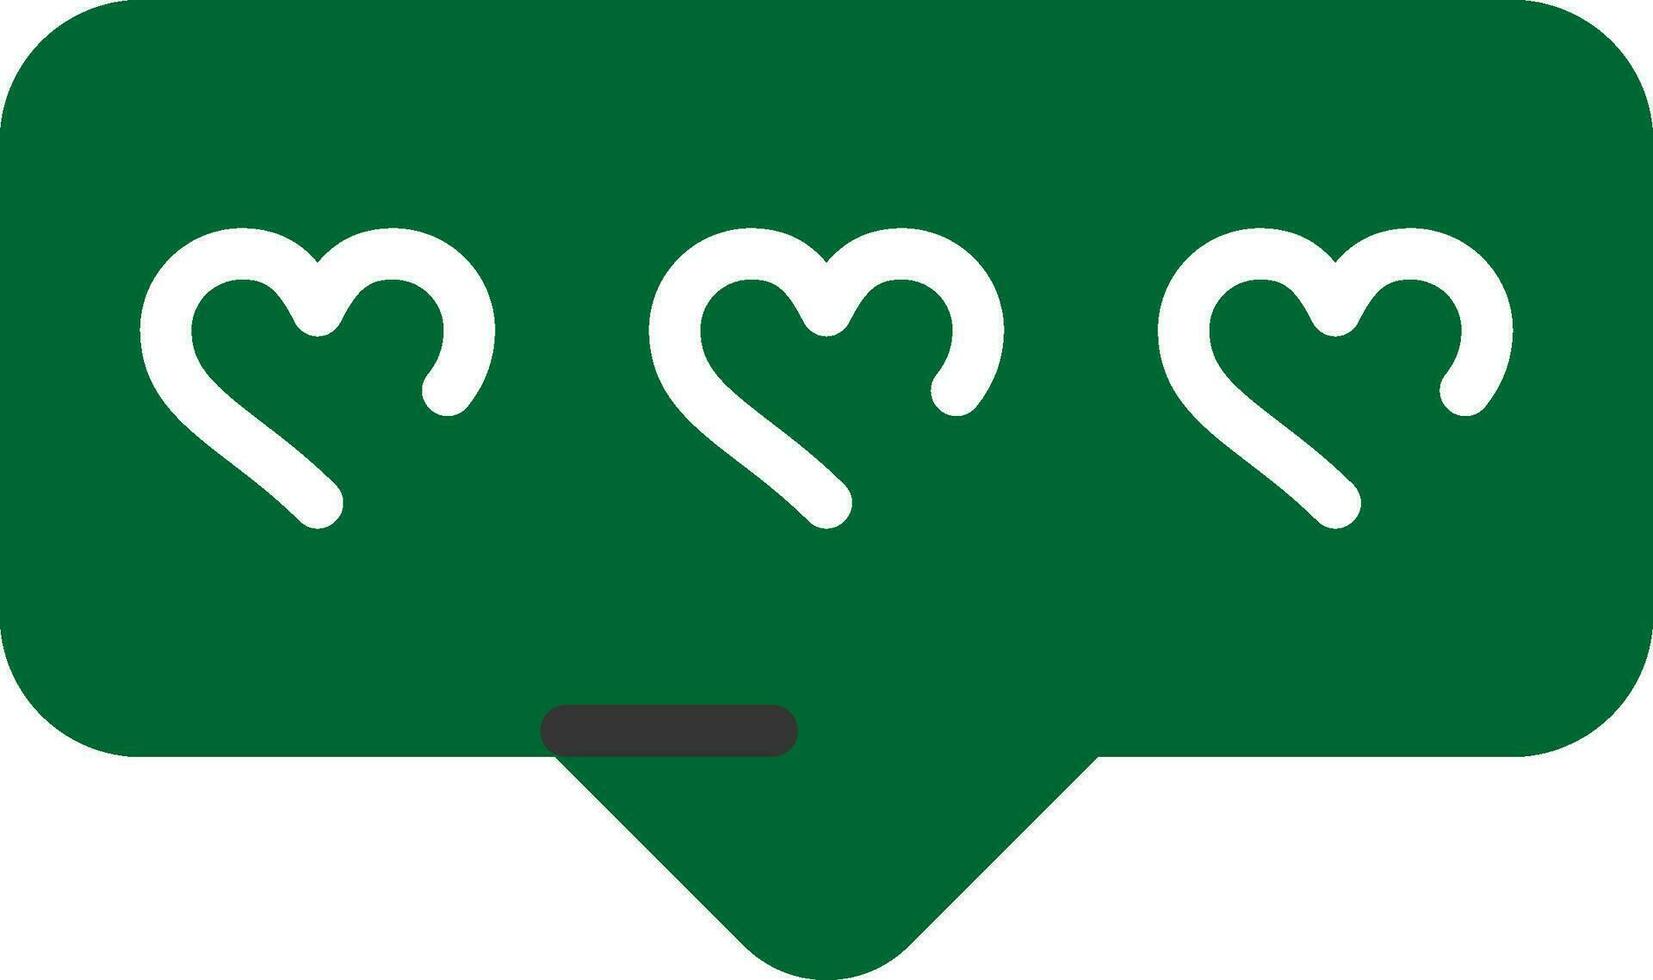 Comment Heart Creative Icon Design vector